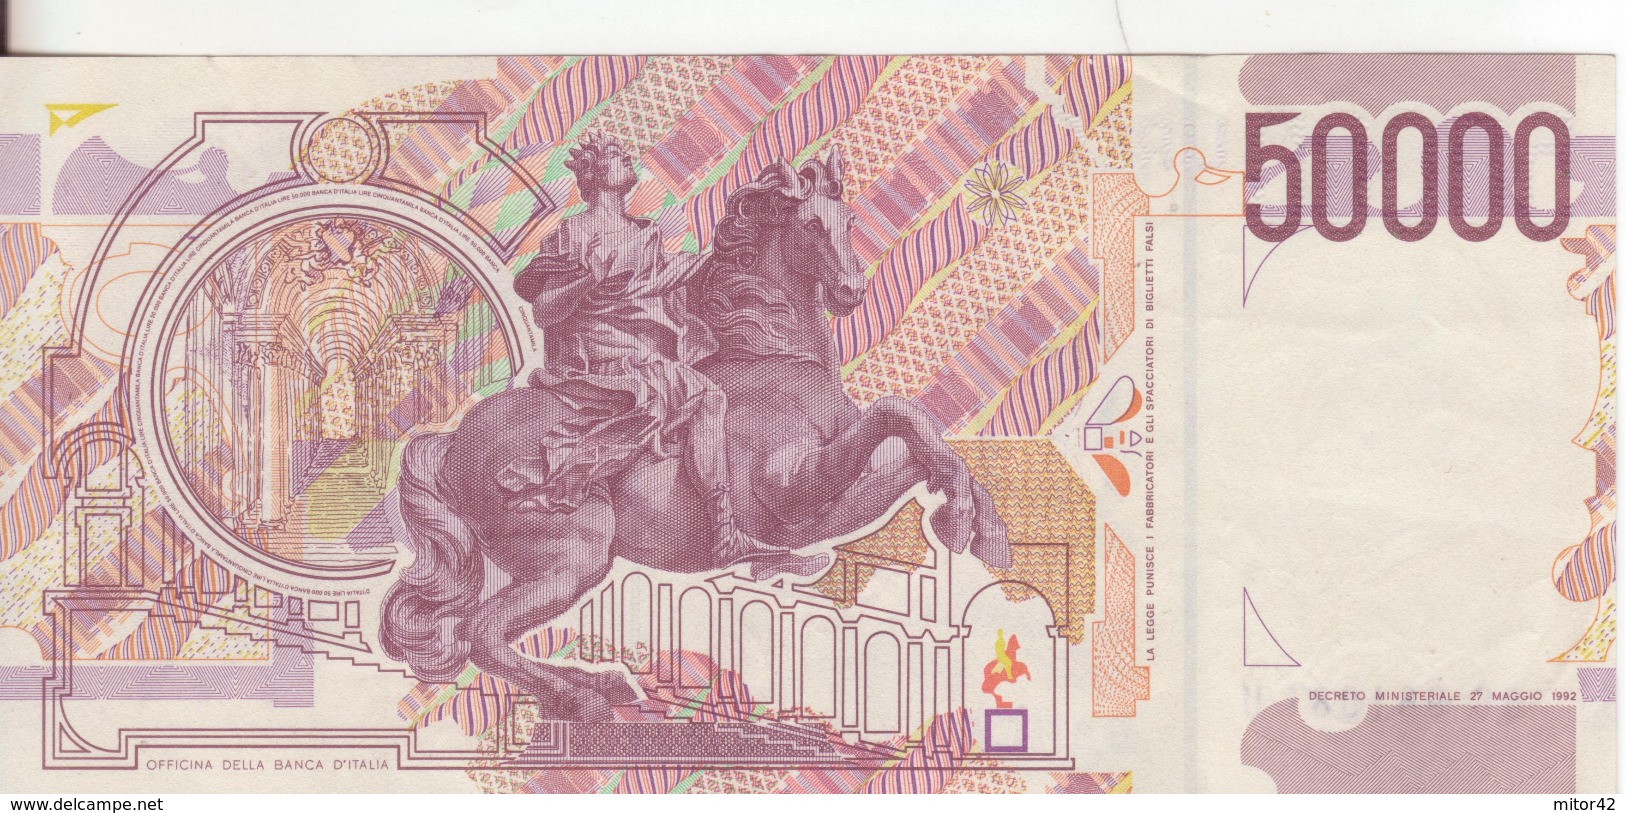 7*-Cartamoneta-Banconota  Italia Repubblica Da L.50.000 Bernini II^ Serie-GC 961081 U- Condizione: Q.F.D.S. - 50000 Lire